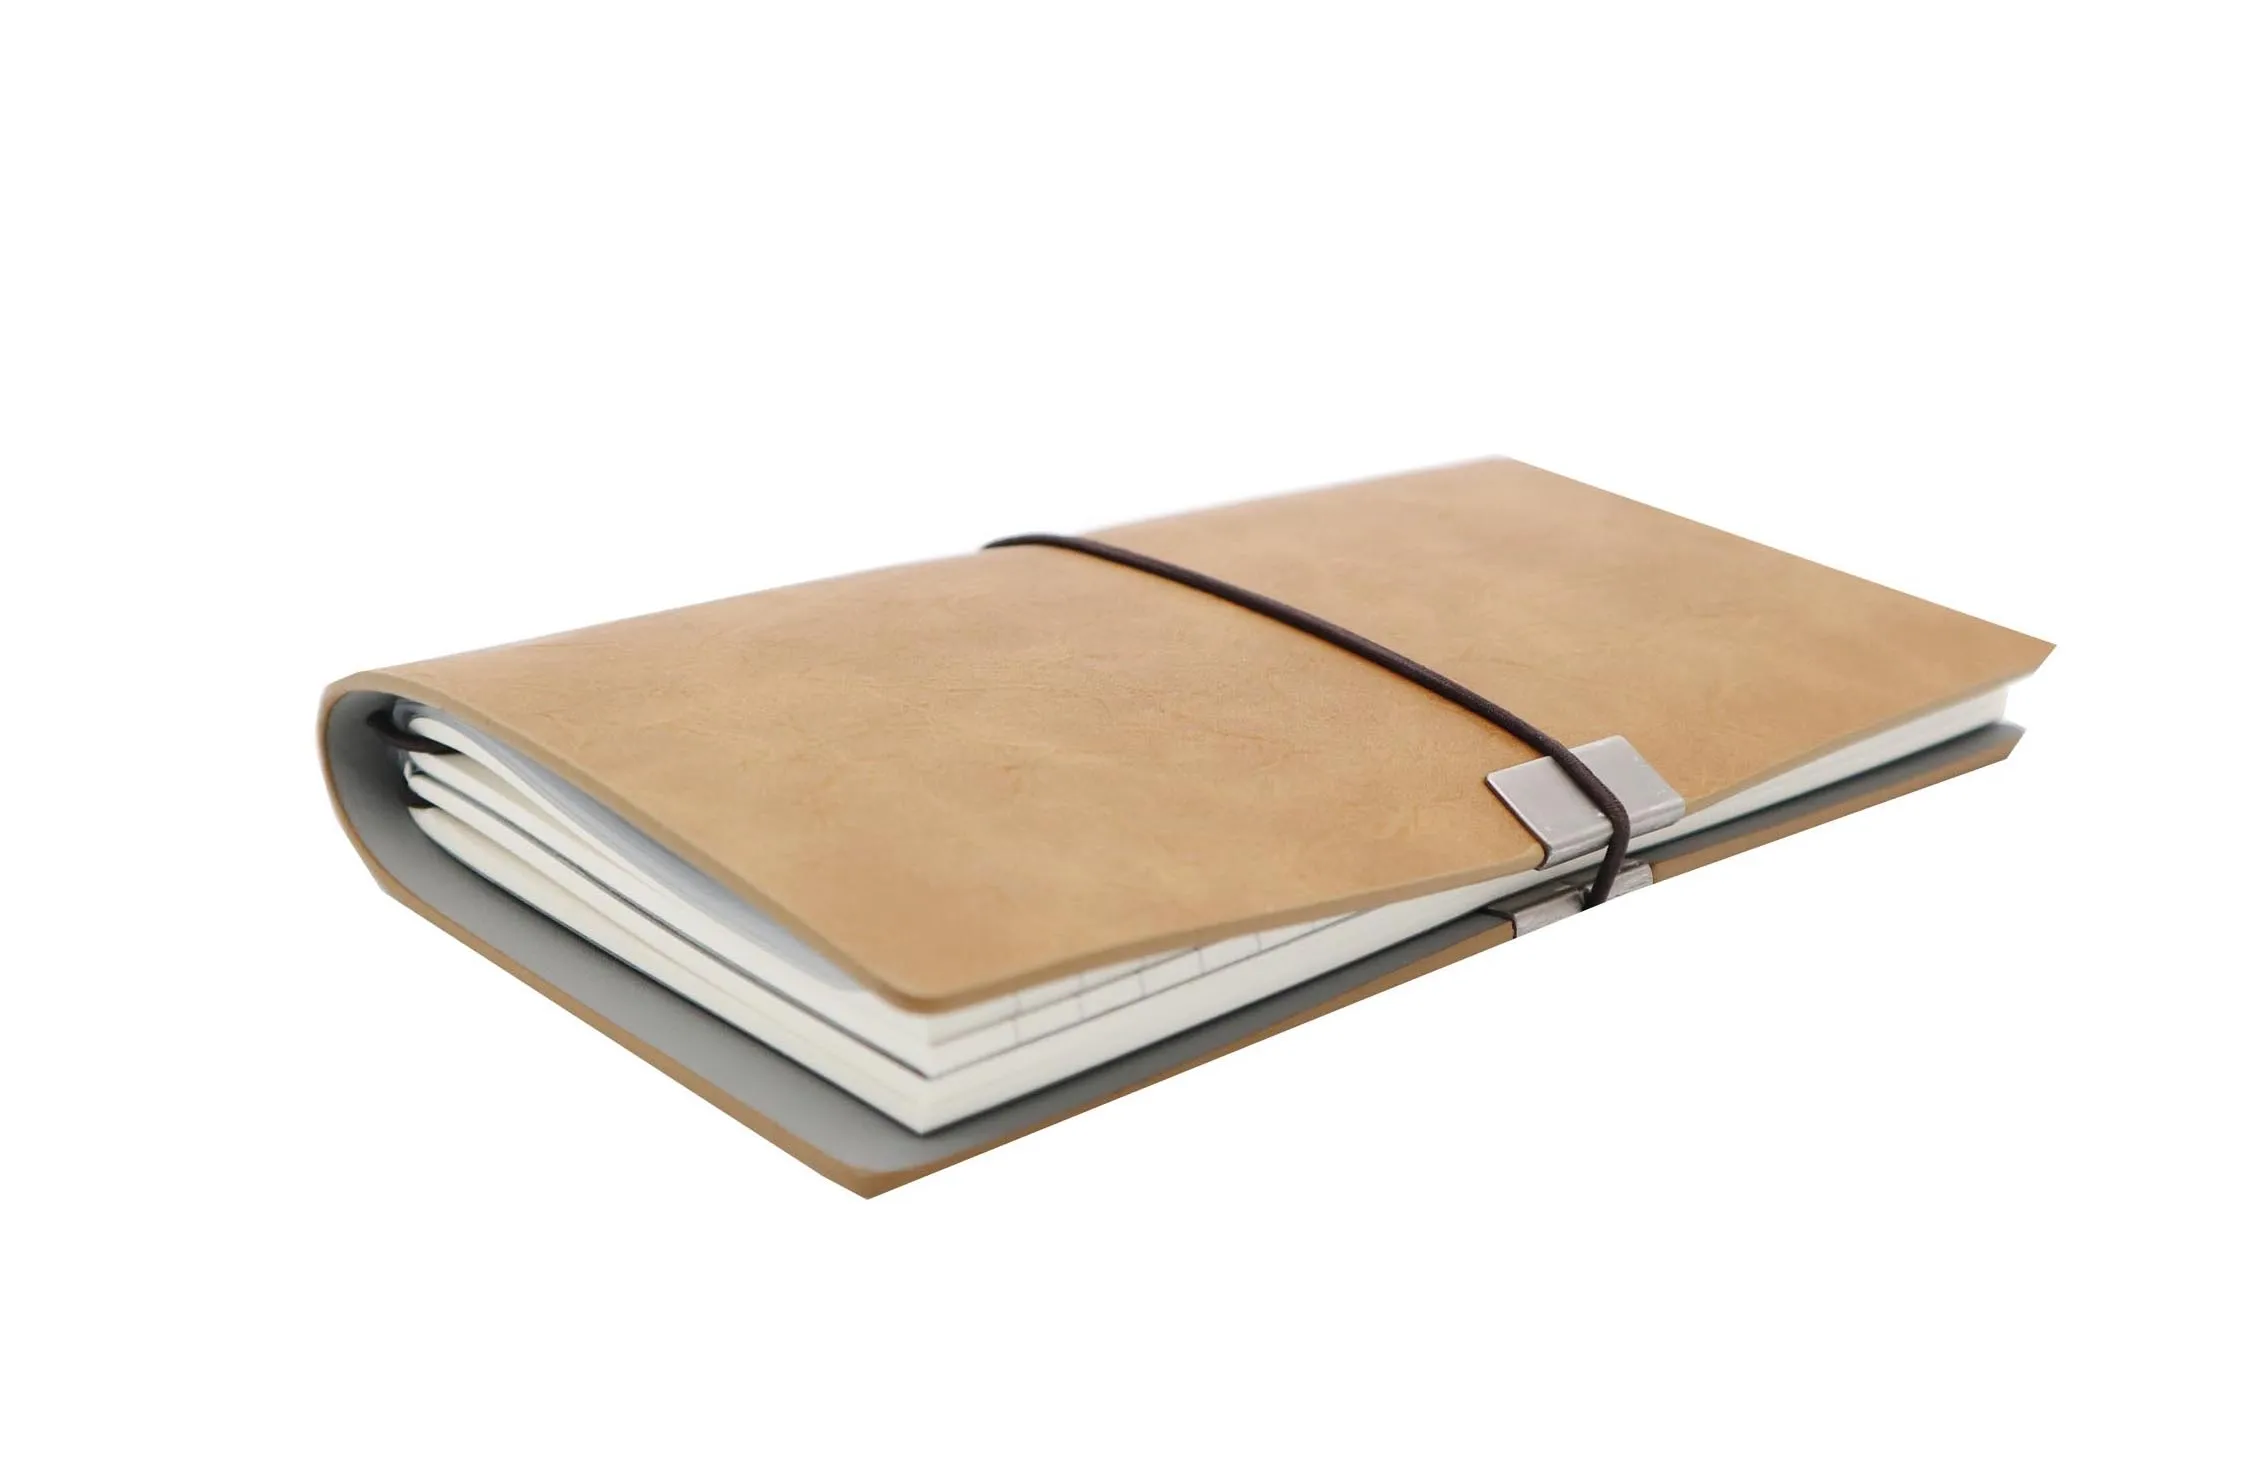 Custom print personal travelers paper notebook with elastic